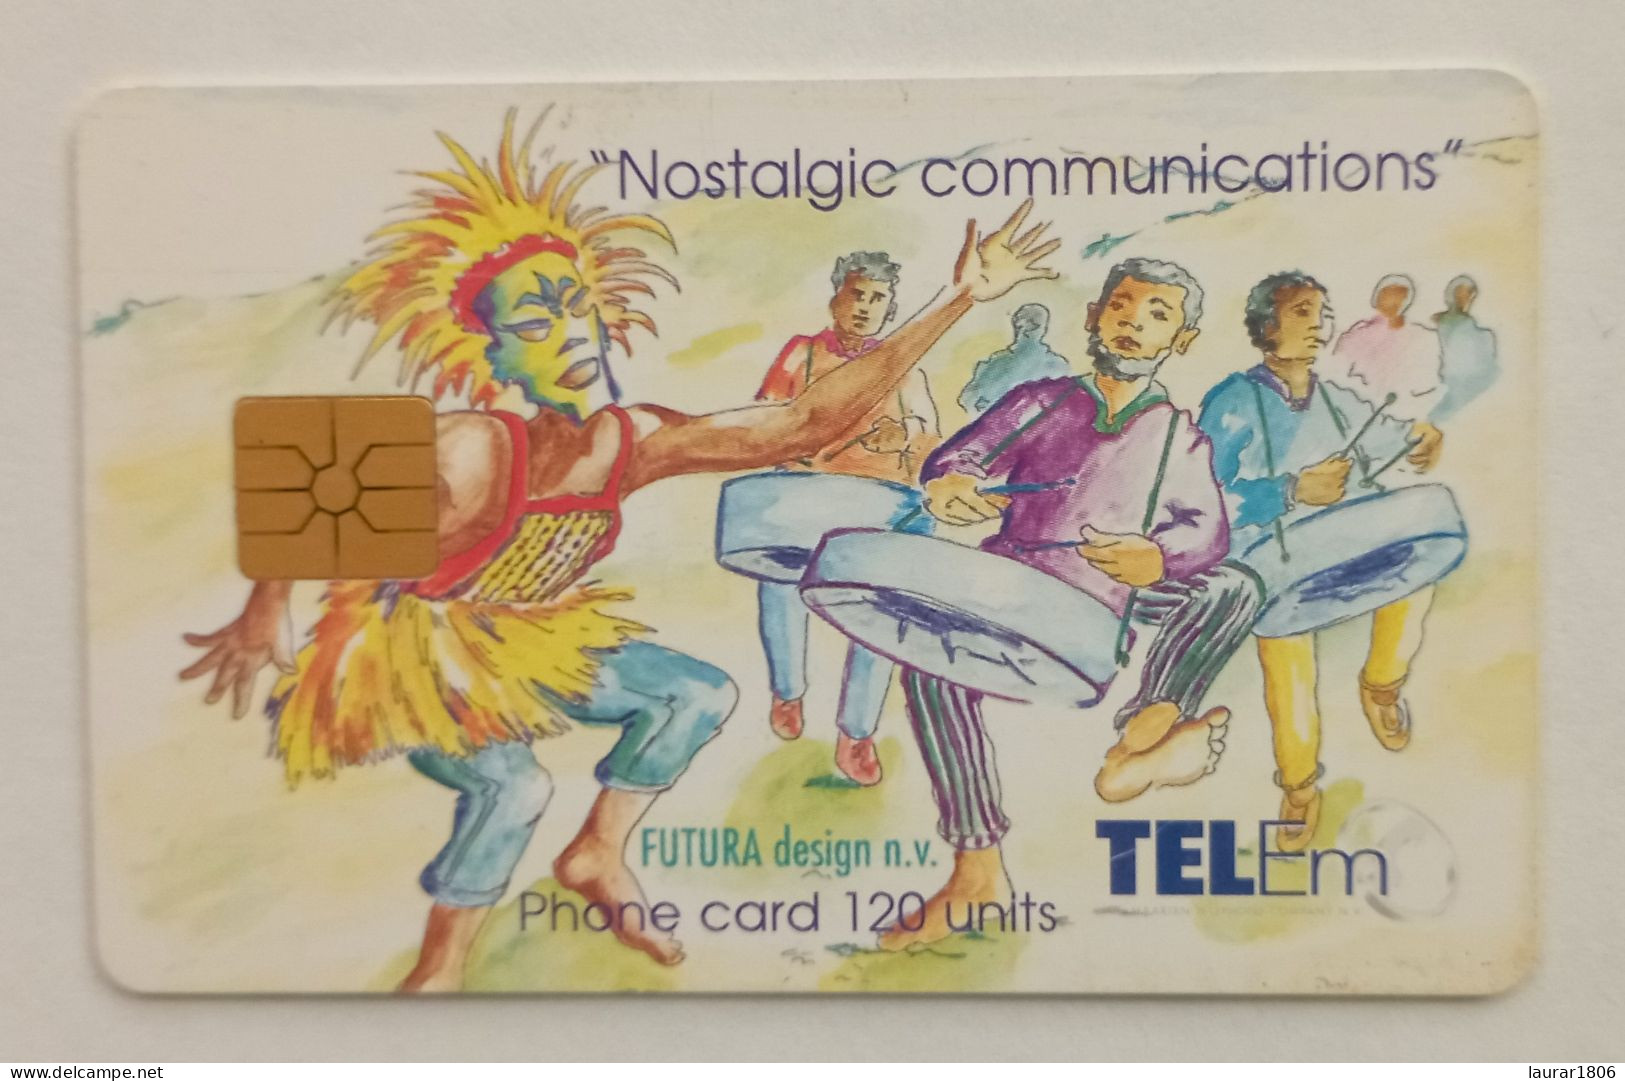 TELECARTE PHONECARD ANTILLES NEERLANDAISES - TEL-EM N.V. - GEM1B White - NOSTALGIC COMMUNICATIONS - 120 Unités - EC - Antillen (Nederlands)